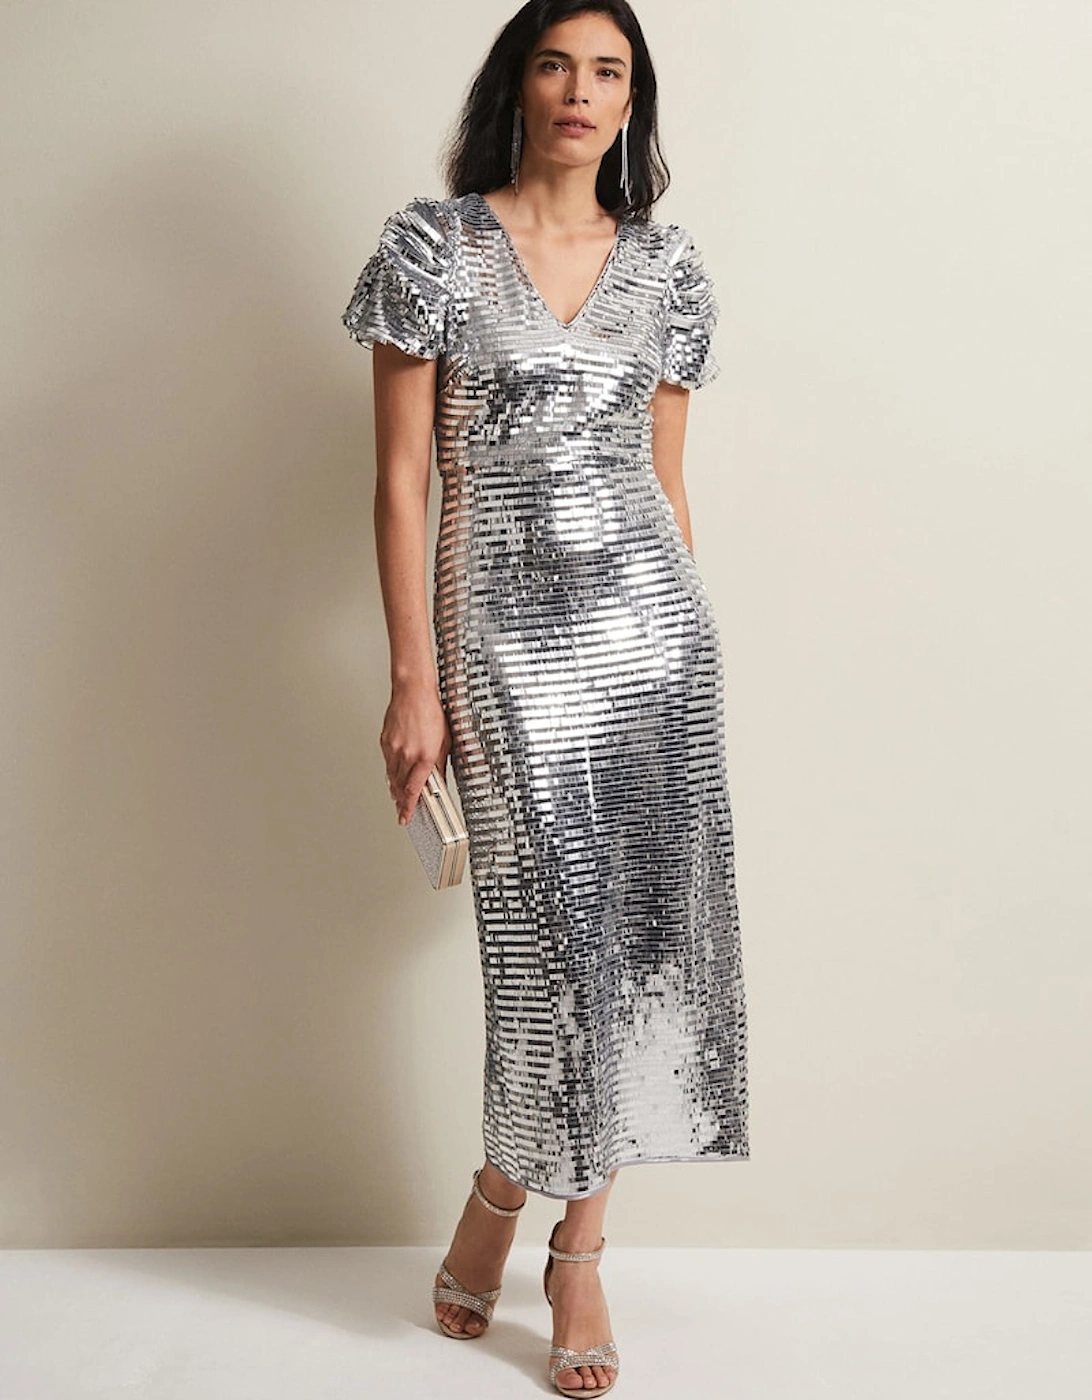 Novalie Silver Sequin Midaxi Dress